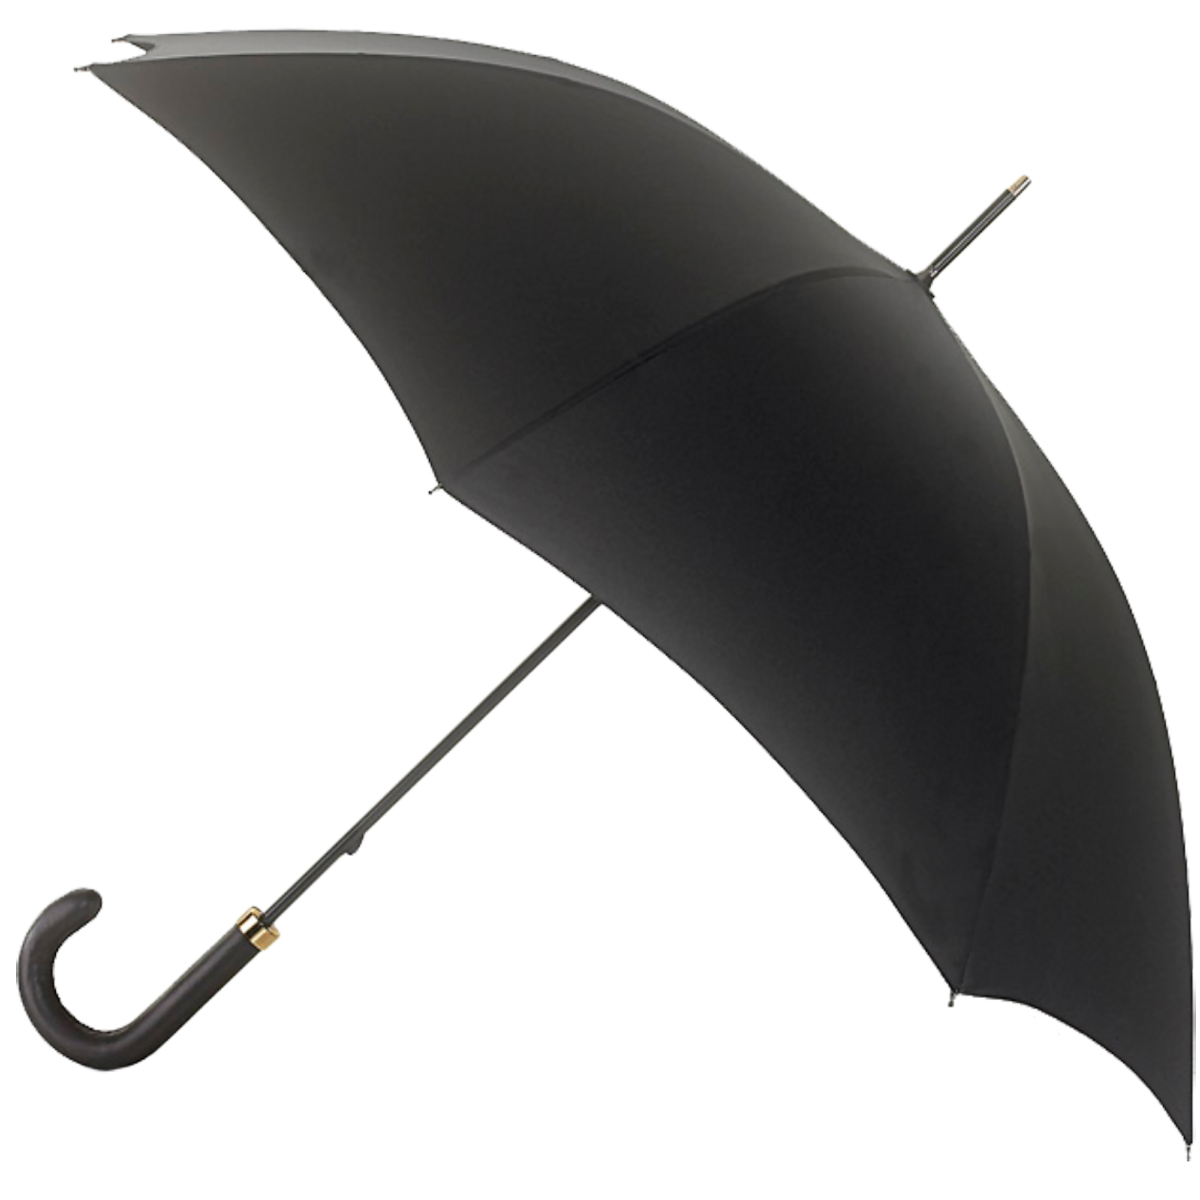 Fulton Minister - Executive Walking Length Umbrella